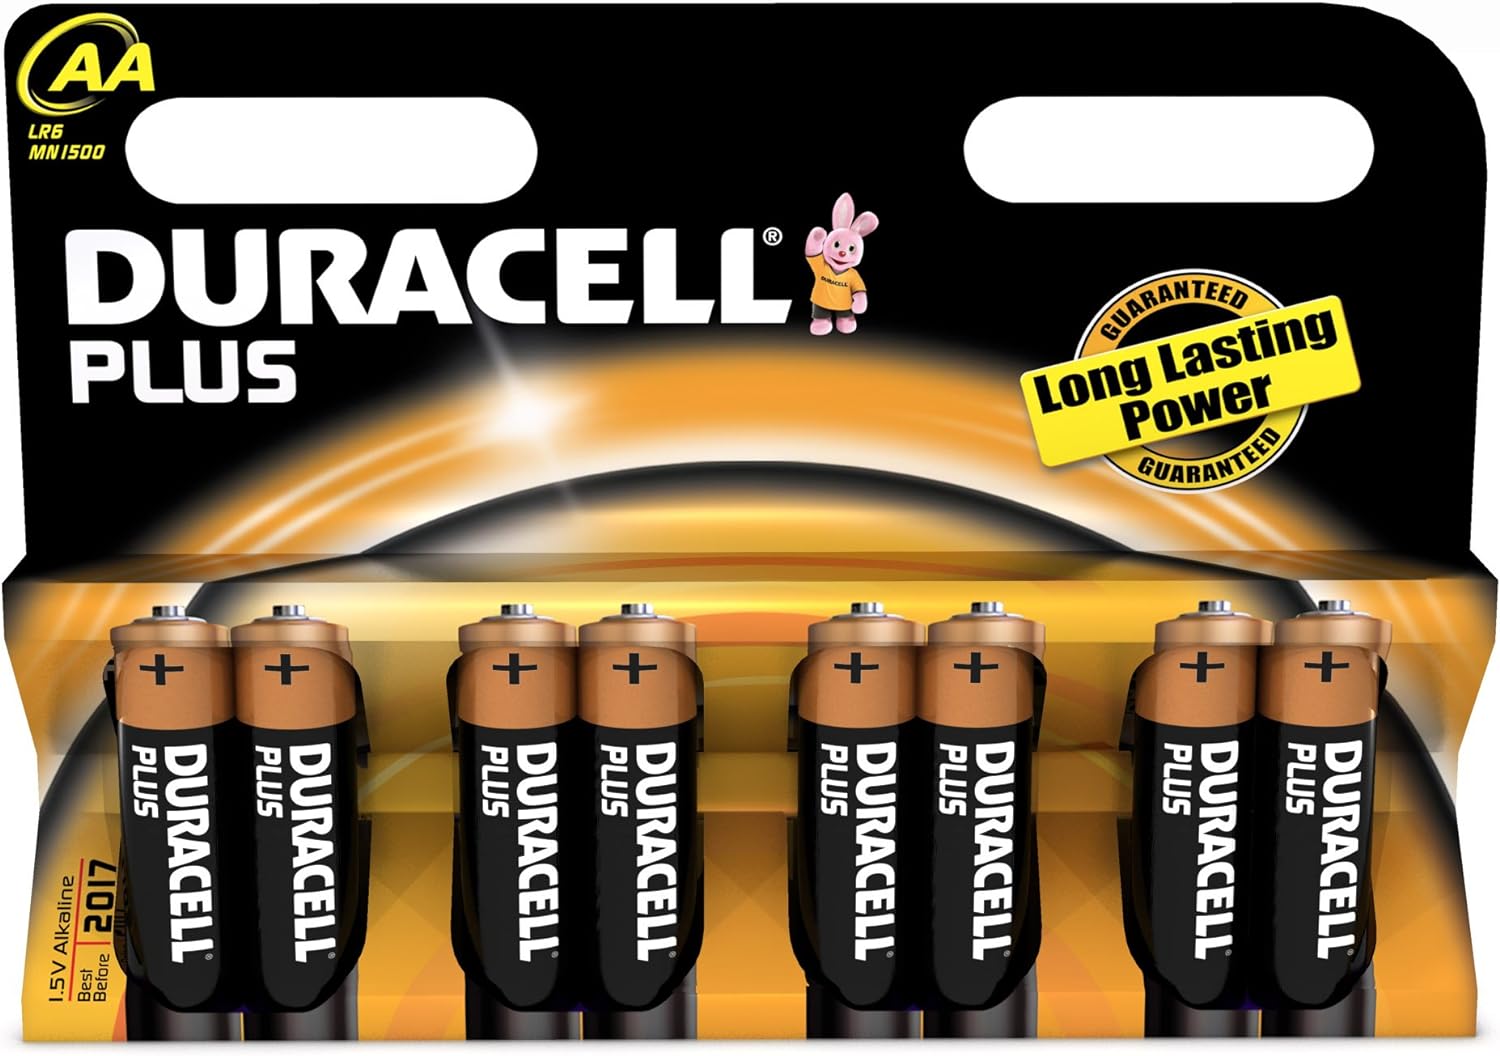 Duracell Plus AA Alkaline Batteries - Pack of 8